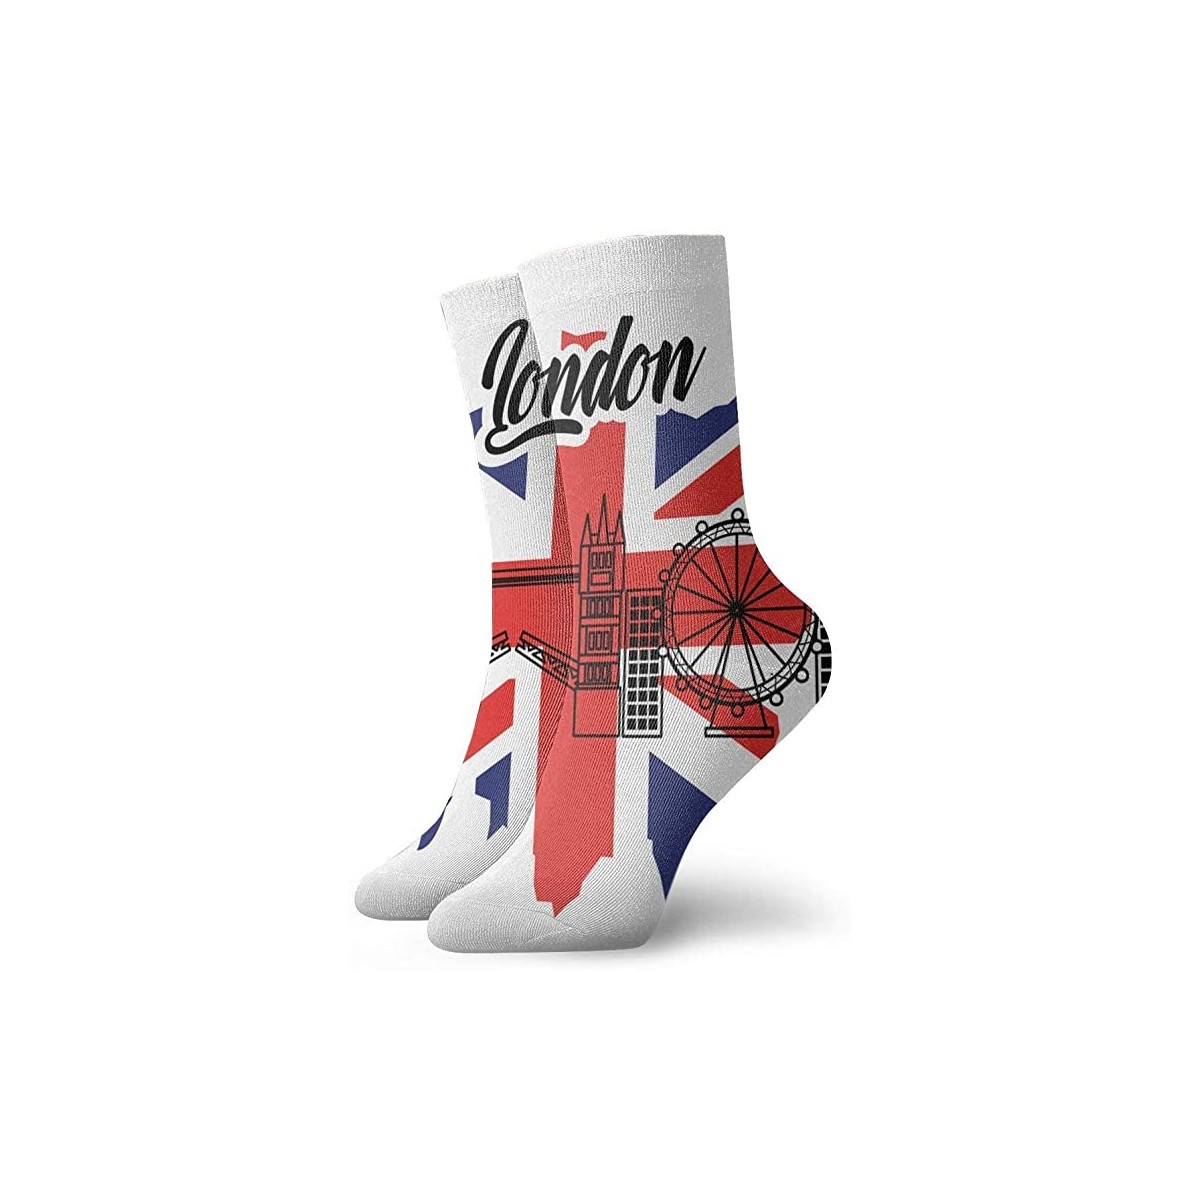 Calzini tema Londra - Inghilterra, da uomo, souvenir